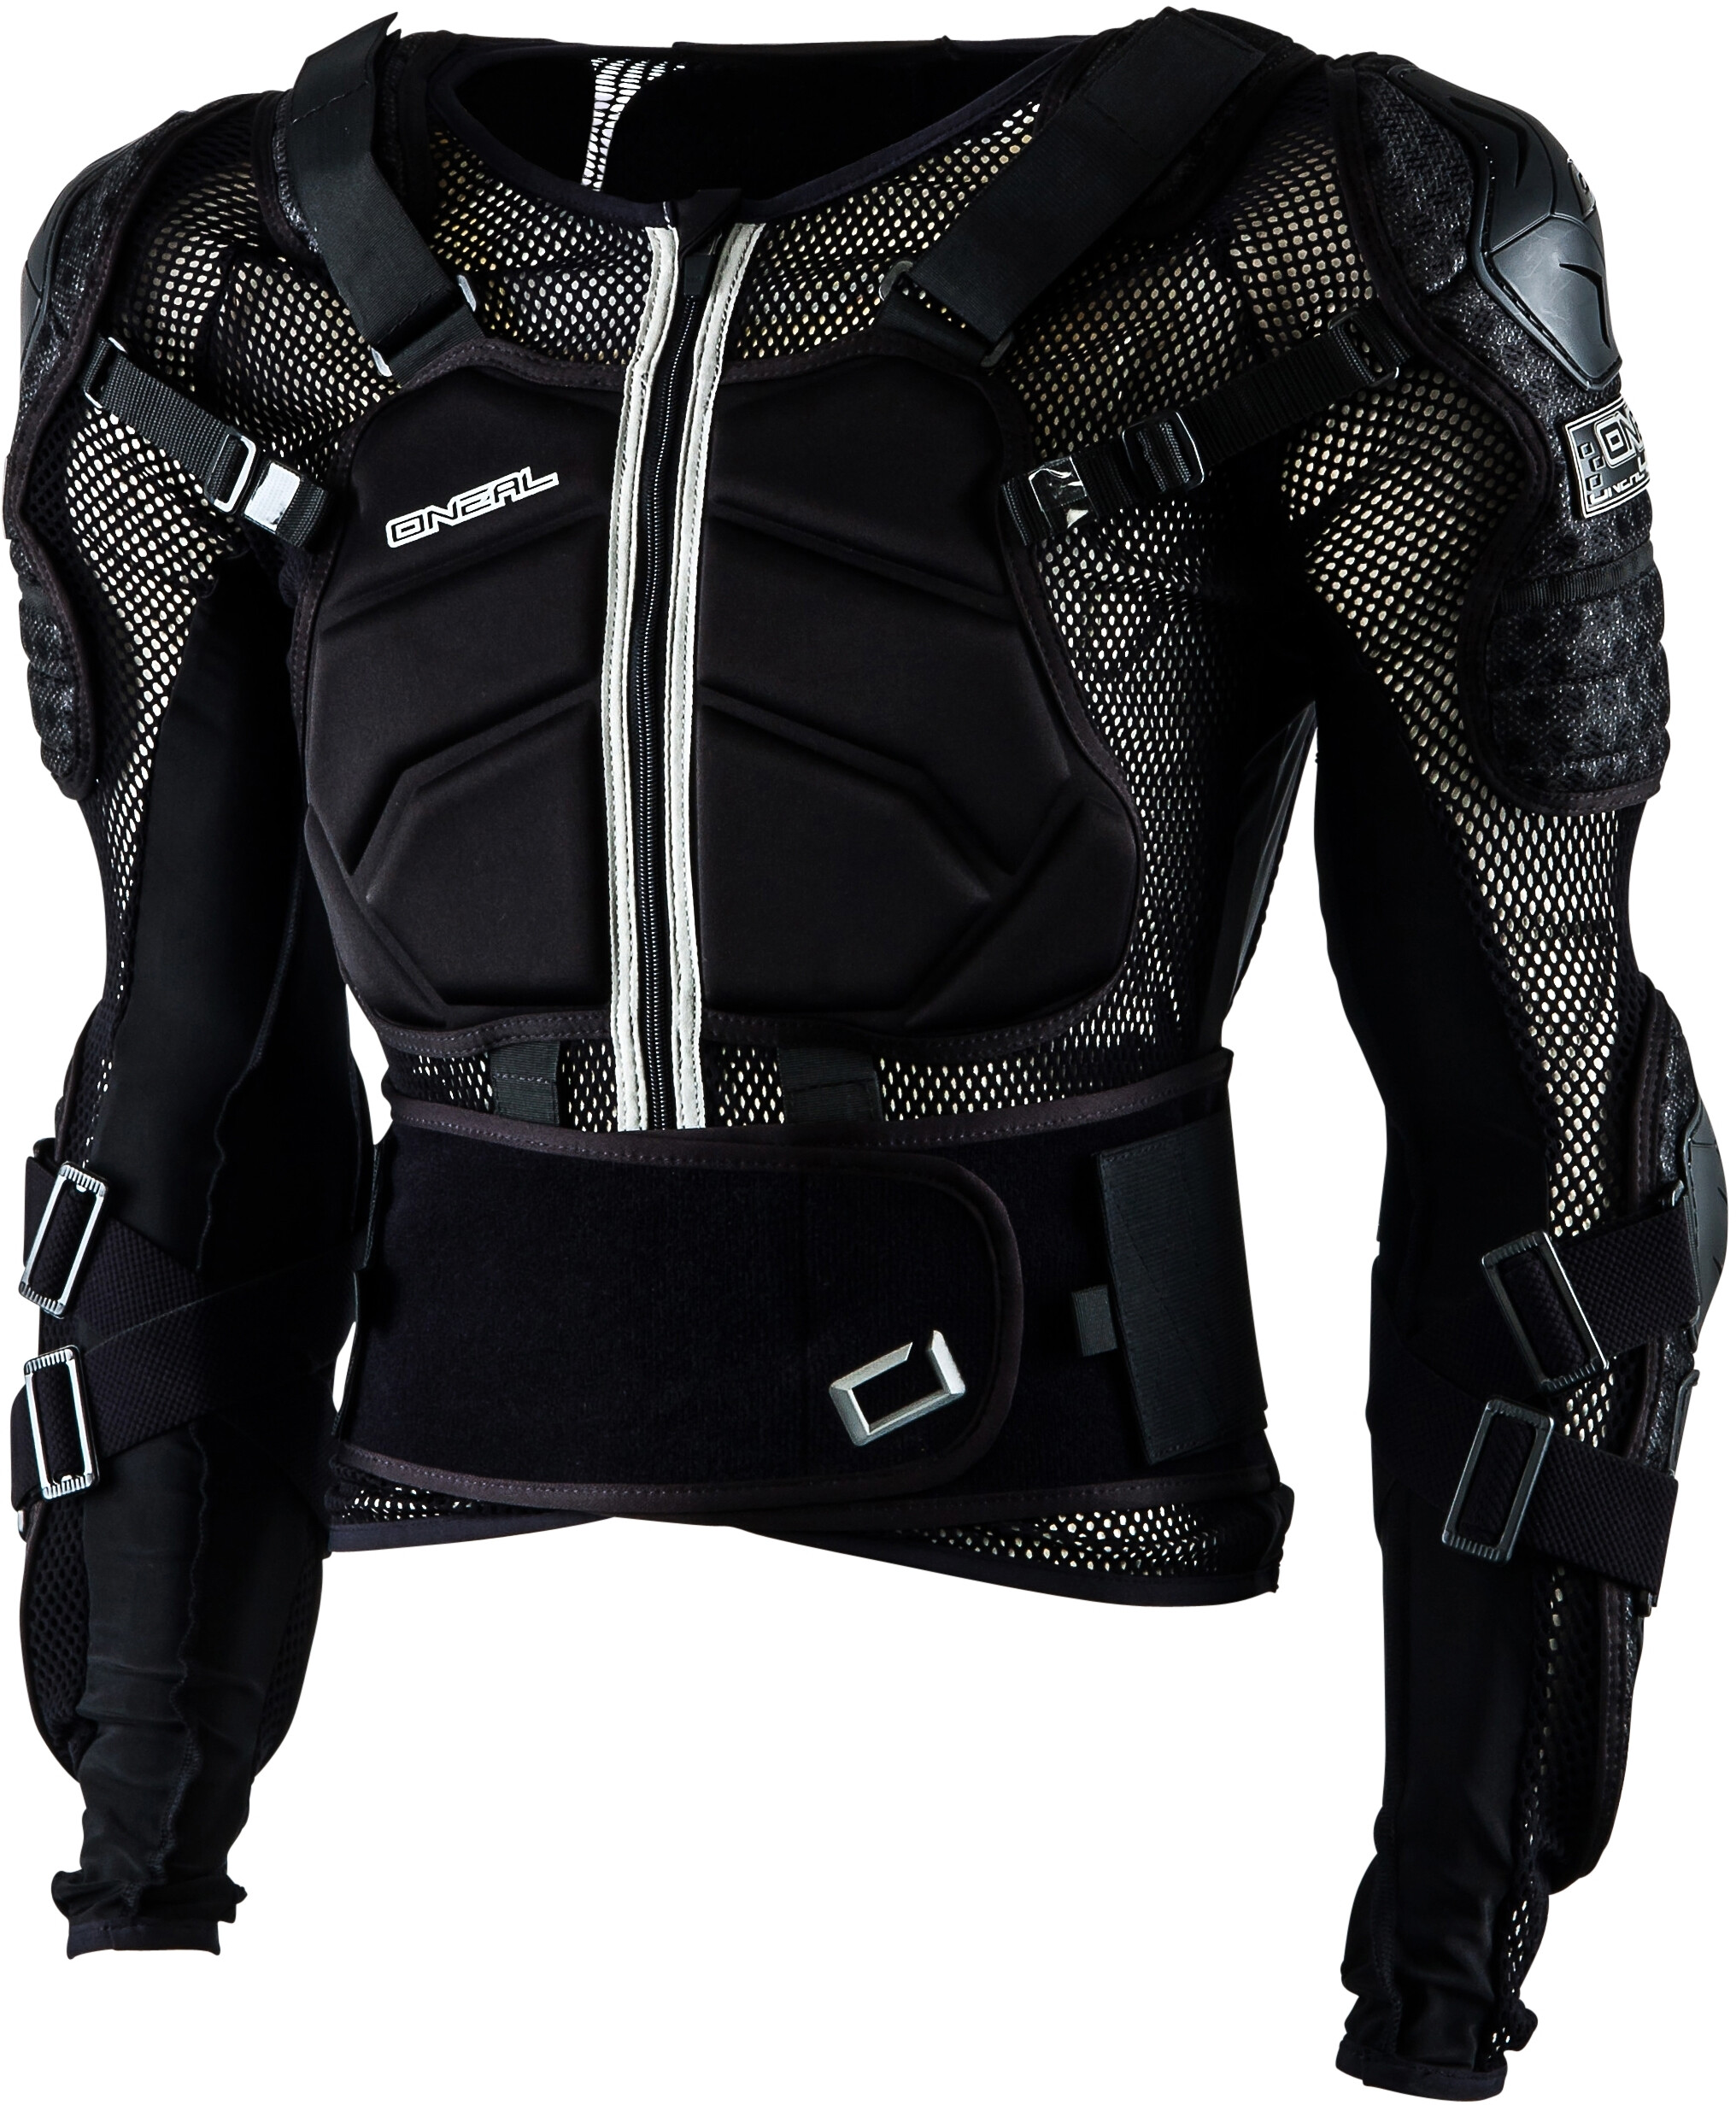 Kinder Stern Motocross Körper Protektor Grün Bionic Anzug Jacke Quad